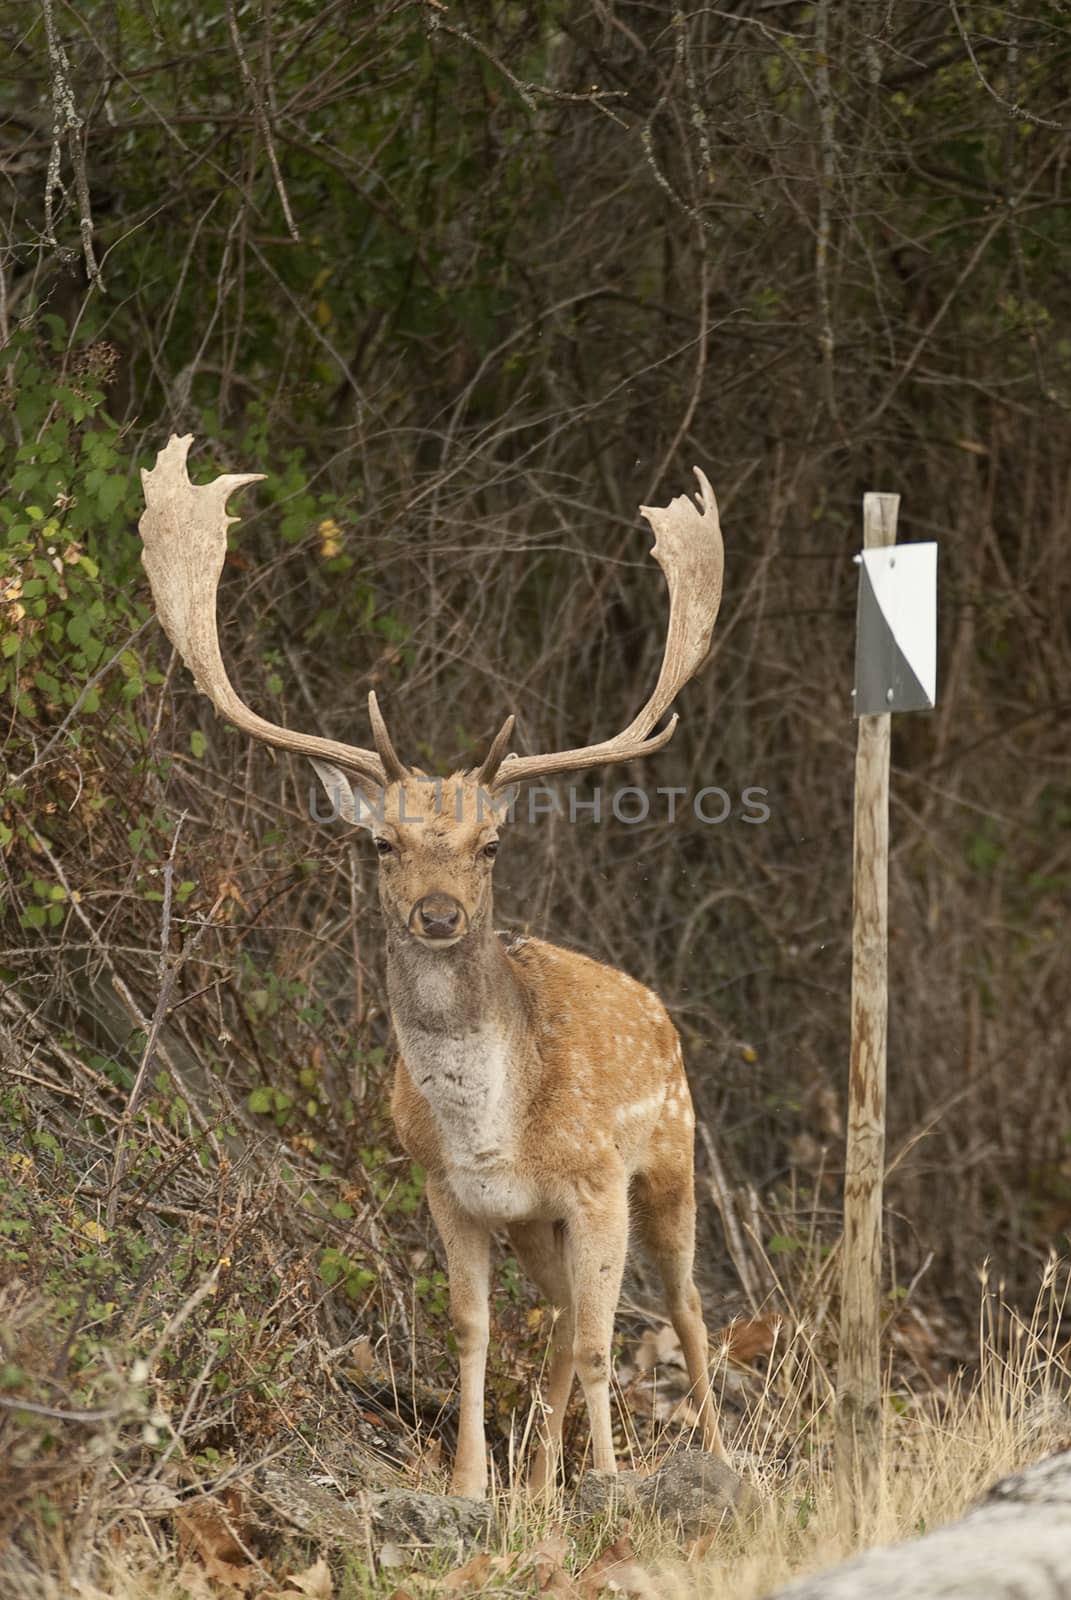 Fallow Deers, Dama dama, Spain, hunting reserve sign by jalonsohu@gmail.com